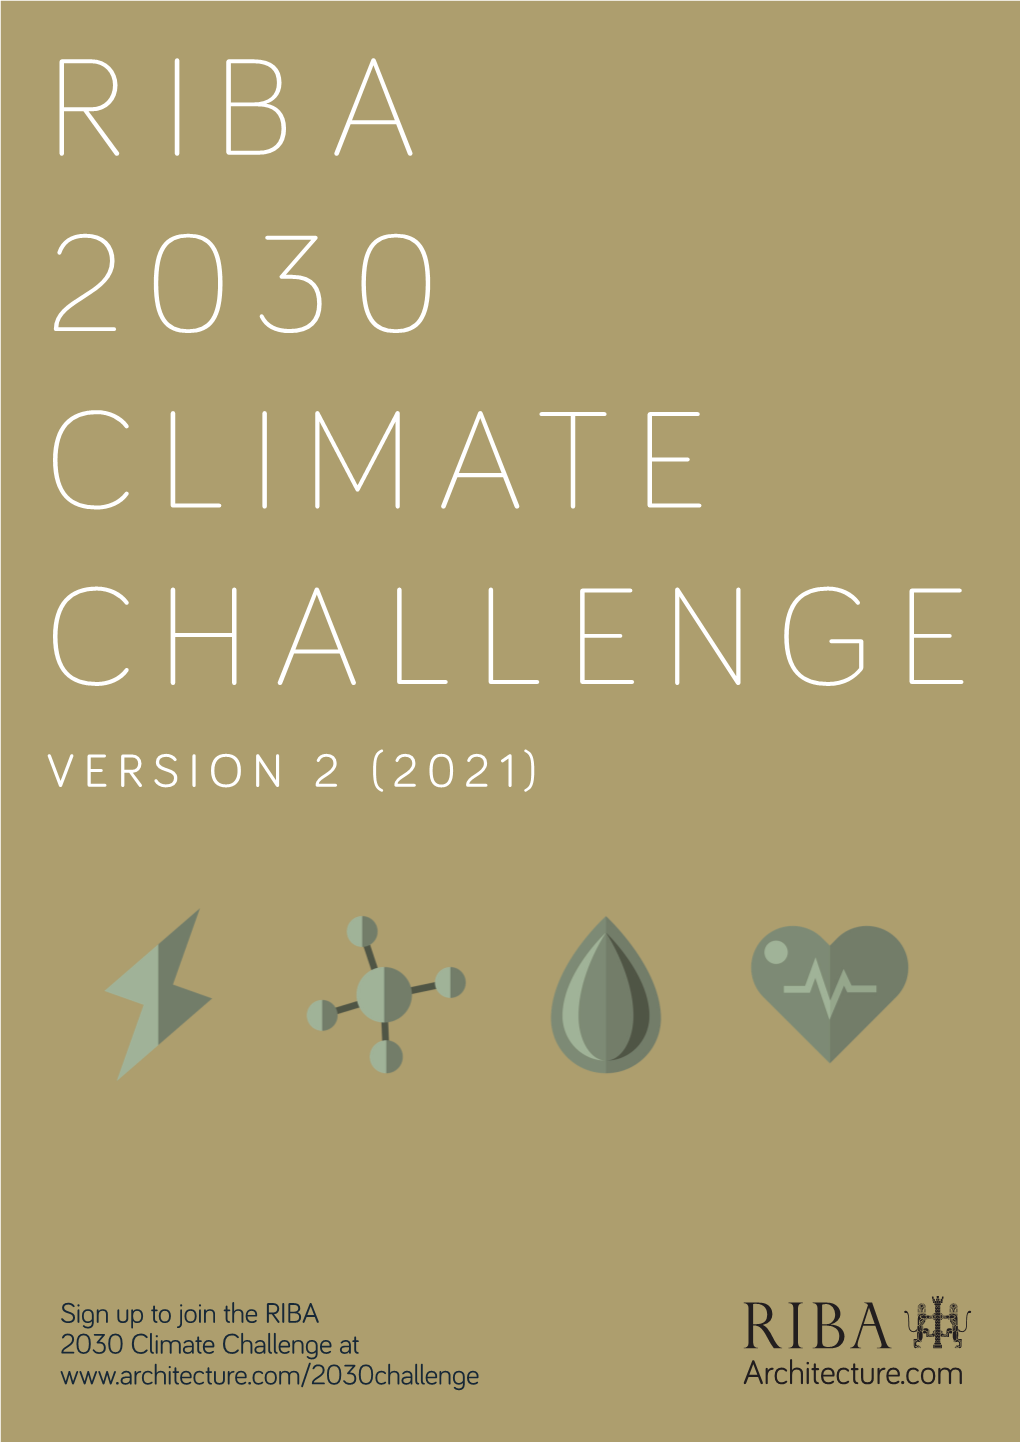 RIBA 2030 Climate Challenge – Version 2 (2021) 1 2030 CLIMATE CHALLENGE VERSION 2 (2021)